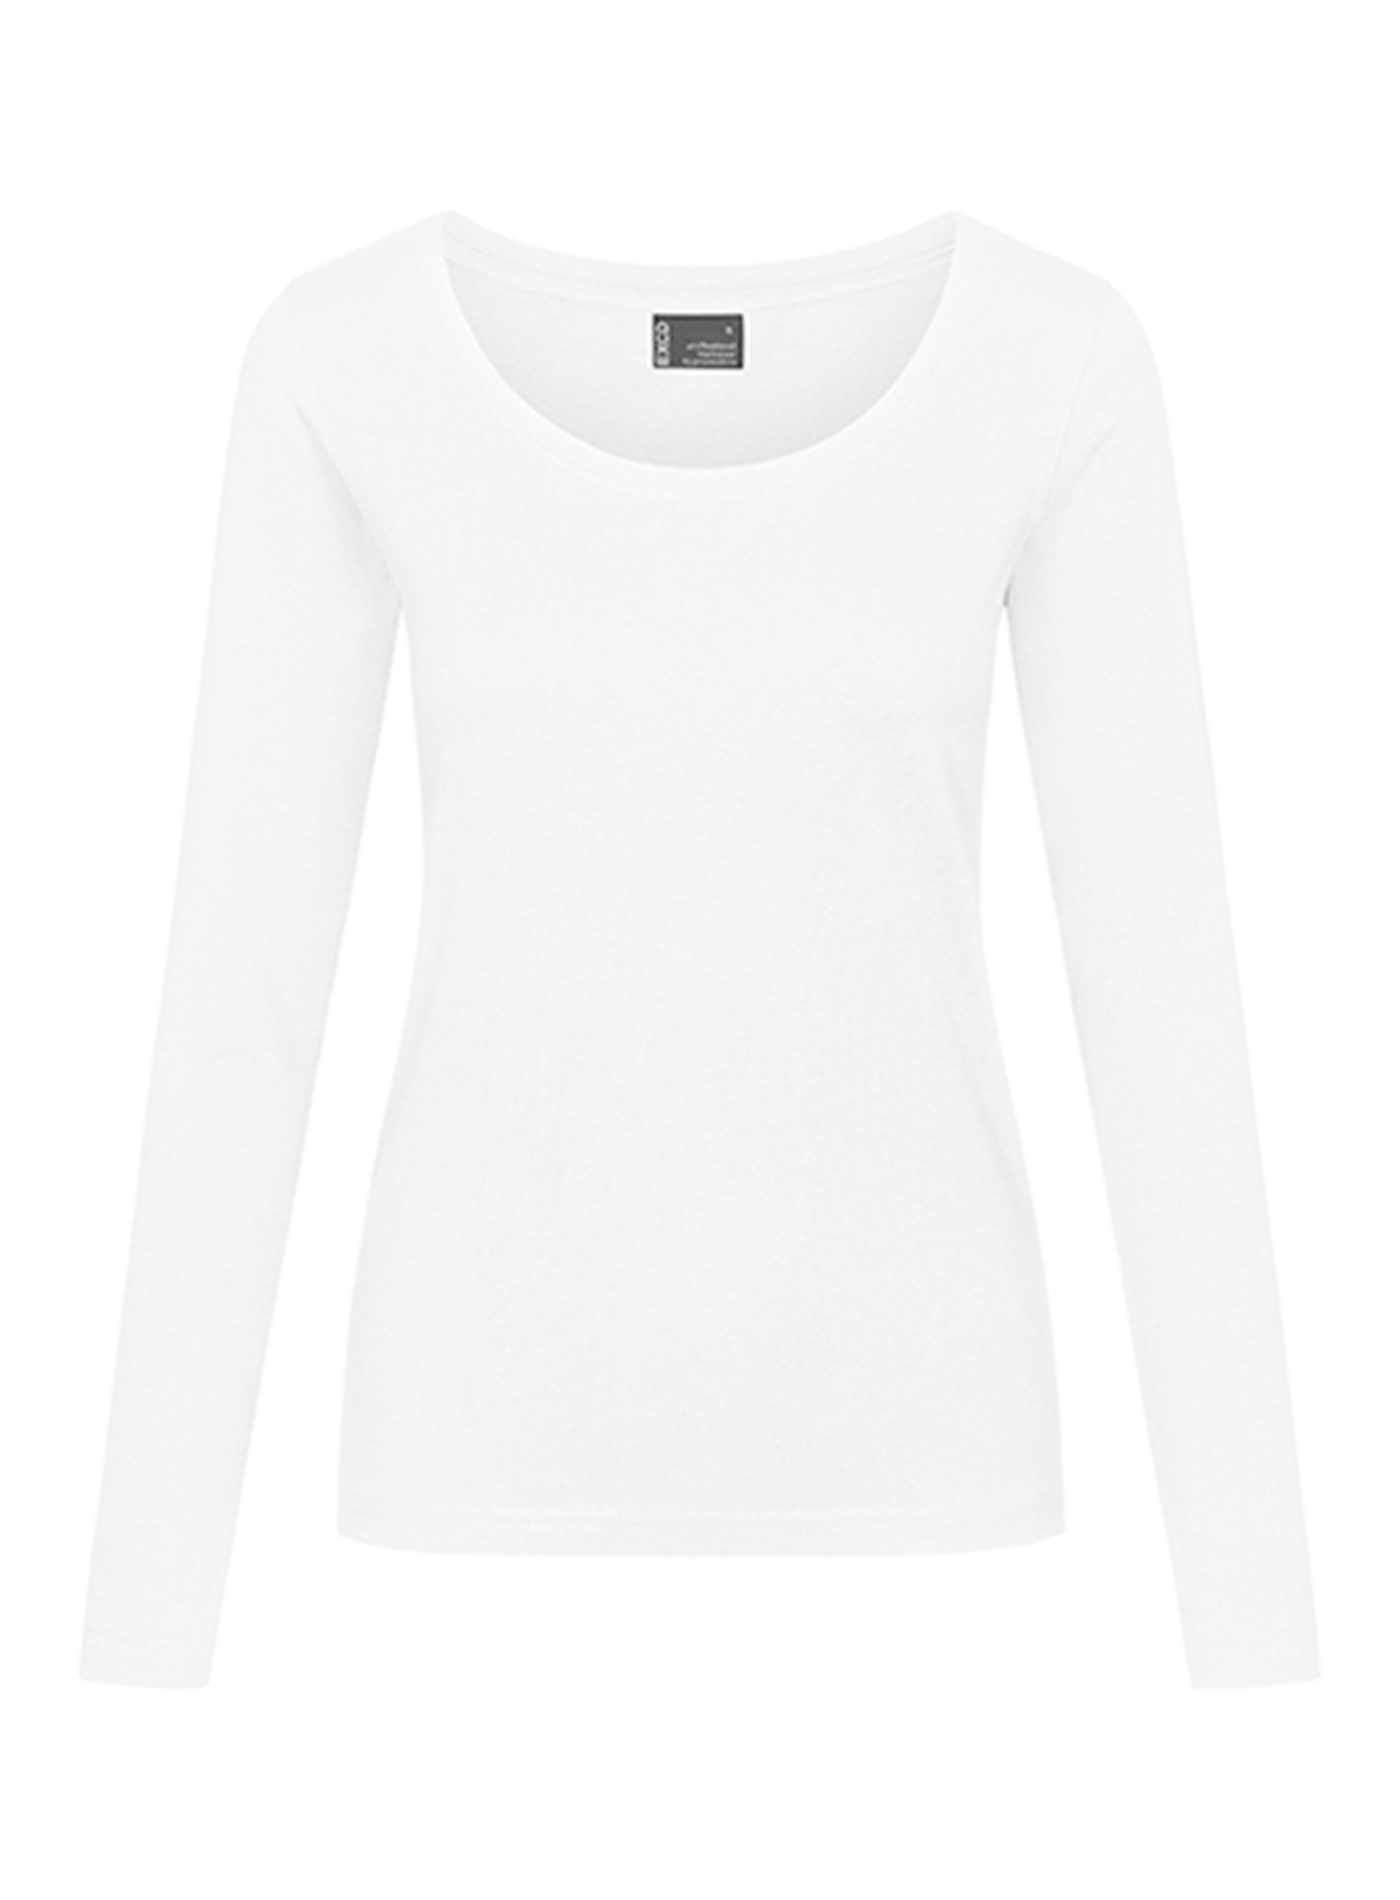 Dámské tričko s dlouhým rukávem Promodoro - Bílá XL